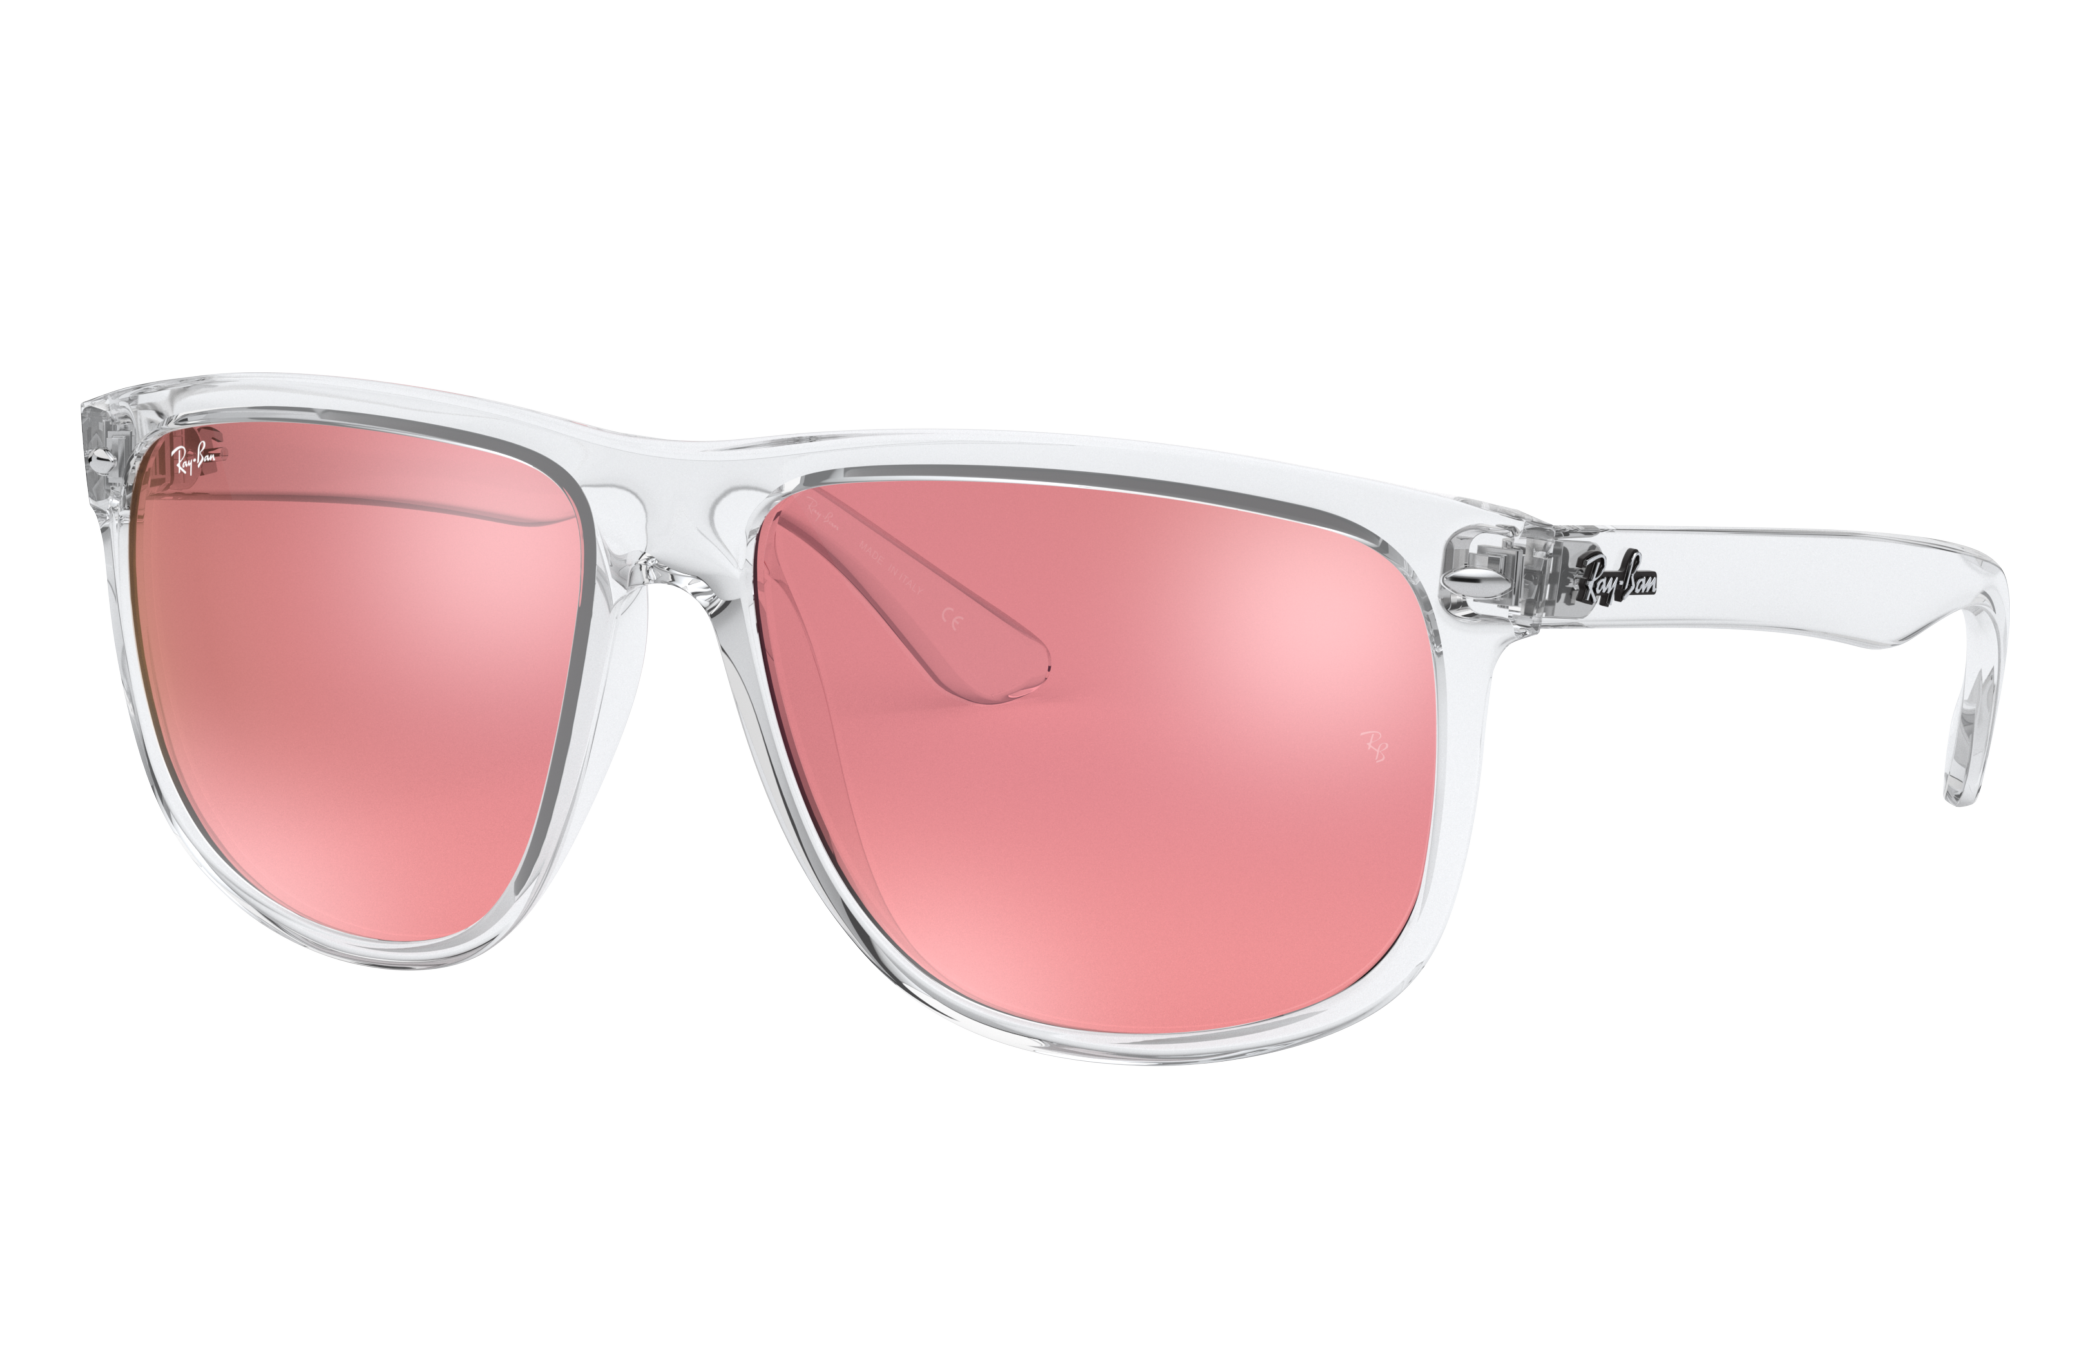 Arriba 77+ imagen ray ban sunglasses pink frame